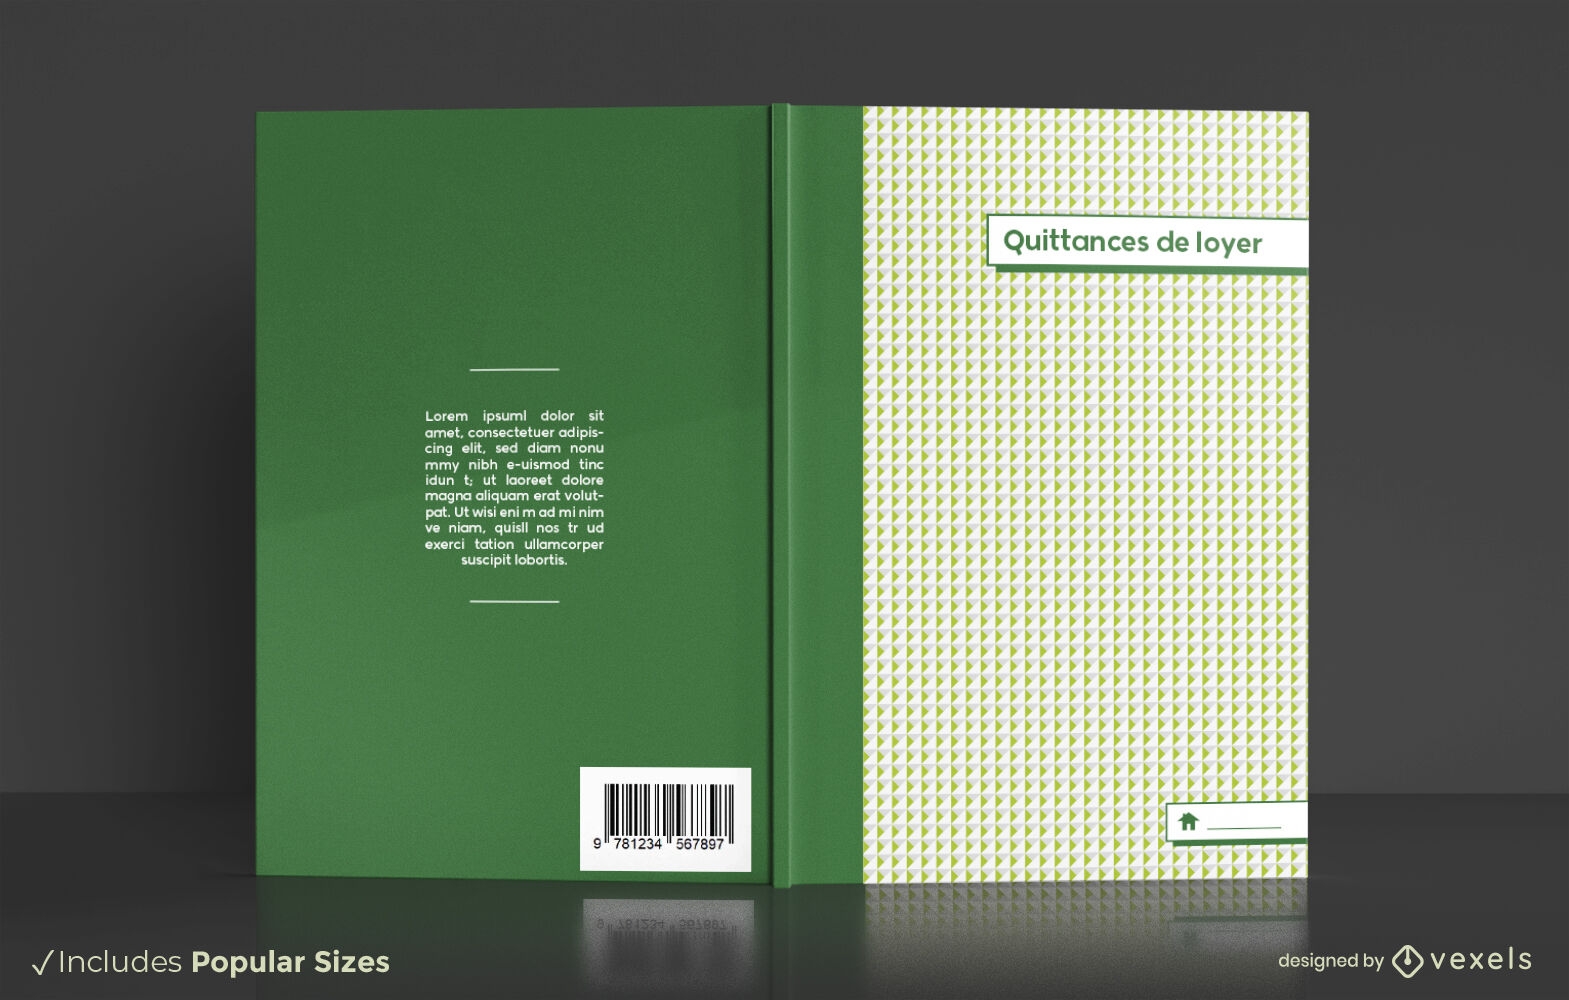 Rent receipt organizer book cover design